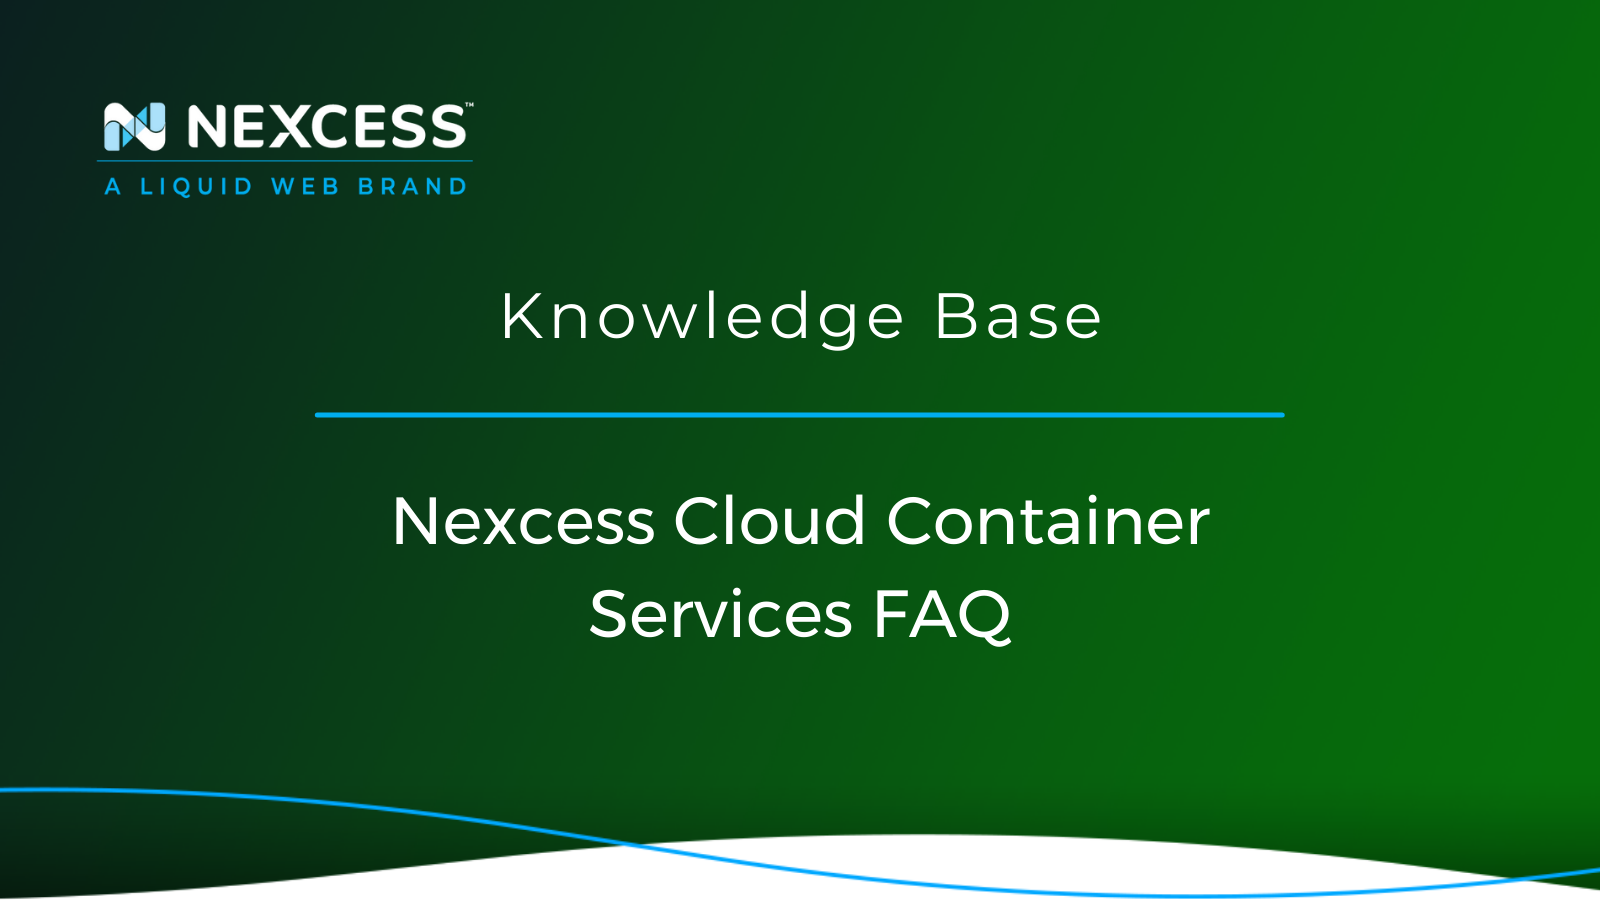 Nexcess Cloud Container Services FAQ